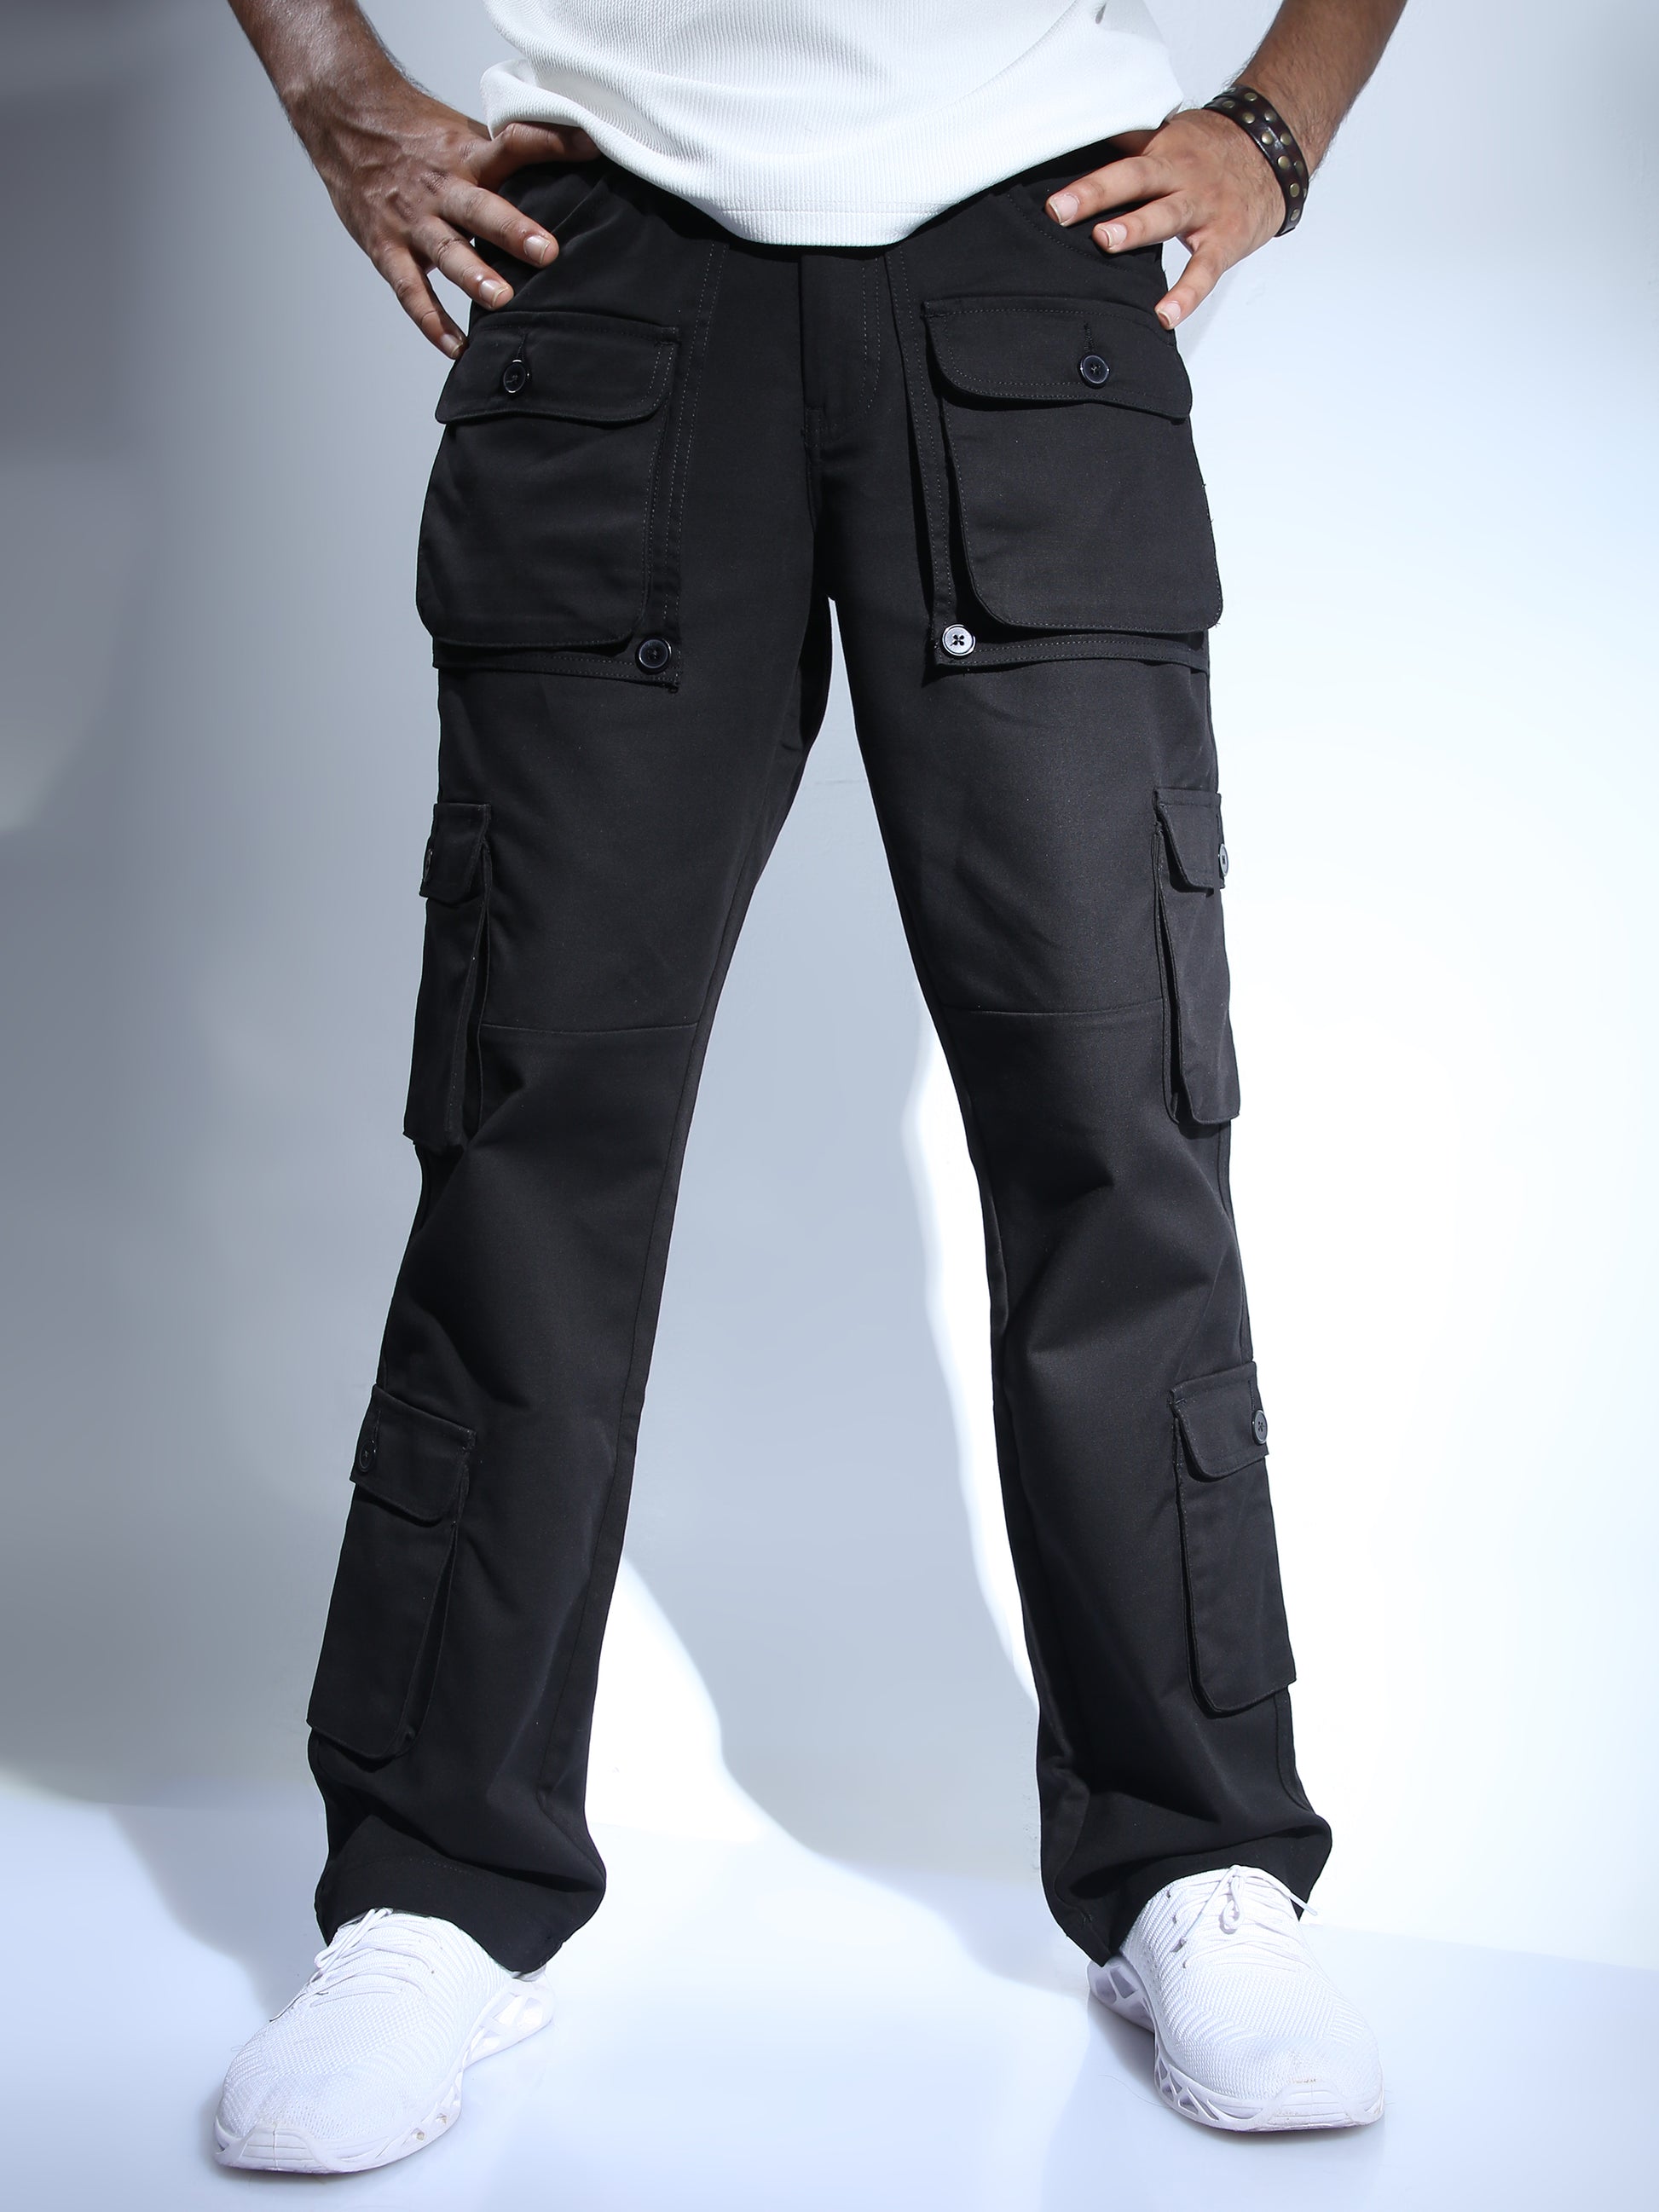 Shop Latest Black Baggy Cargo Pants for Men Online in India